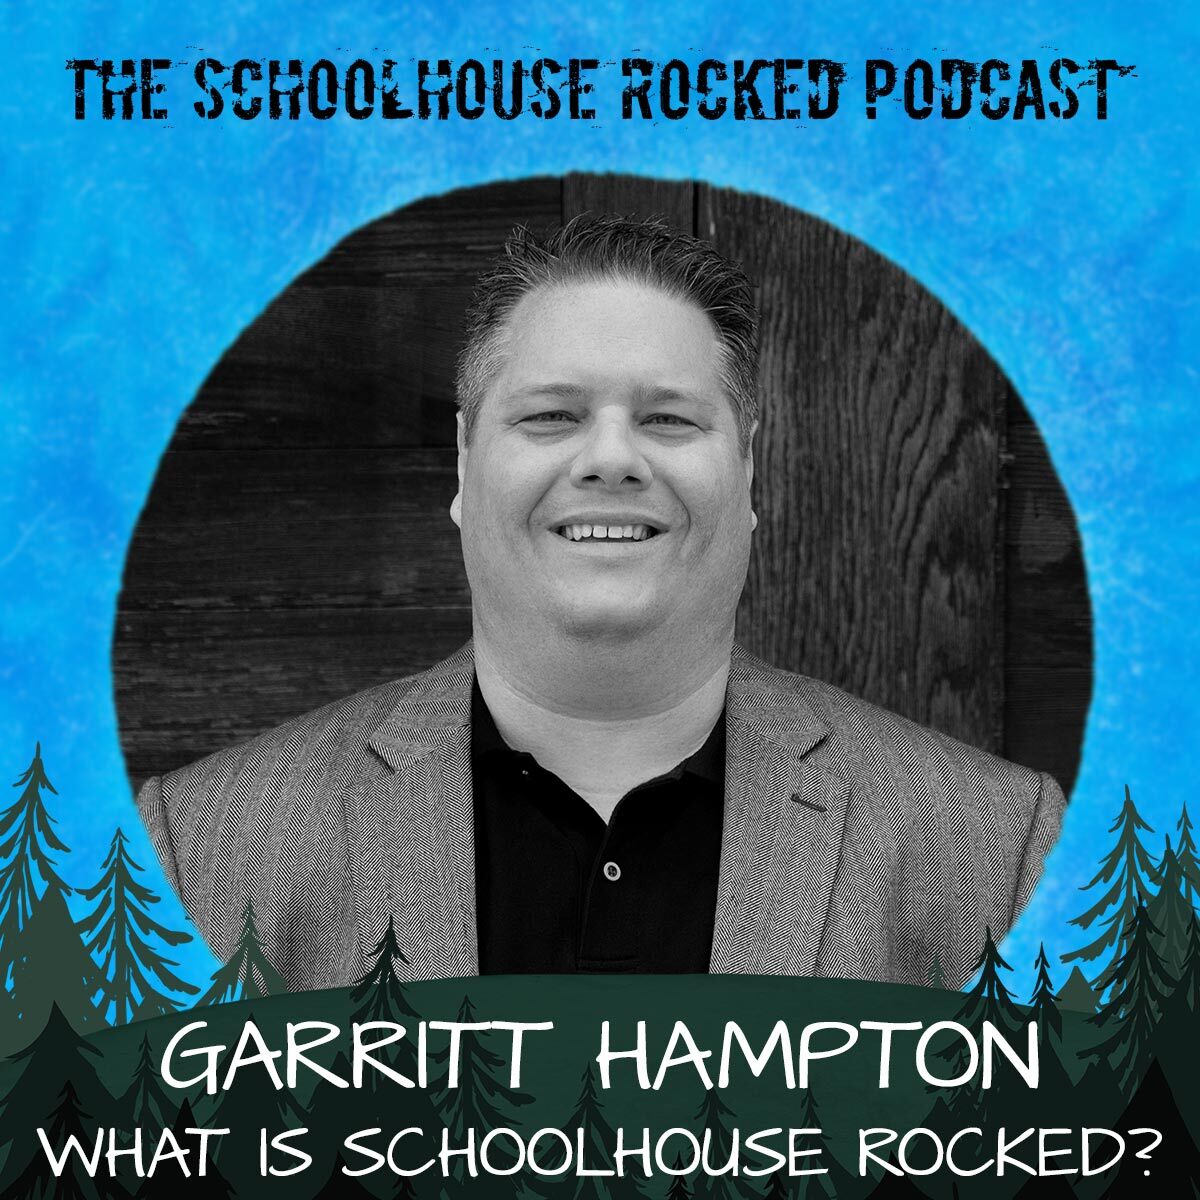 New_Garritt_Hampton_Podcast_Thumbnail.jpg